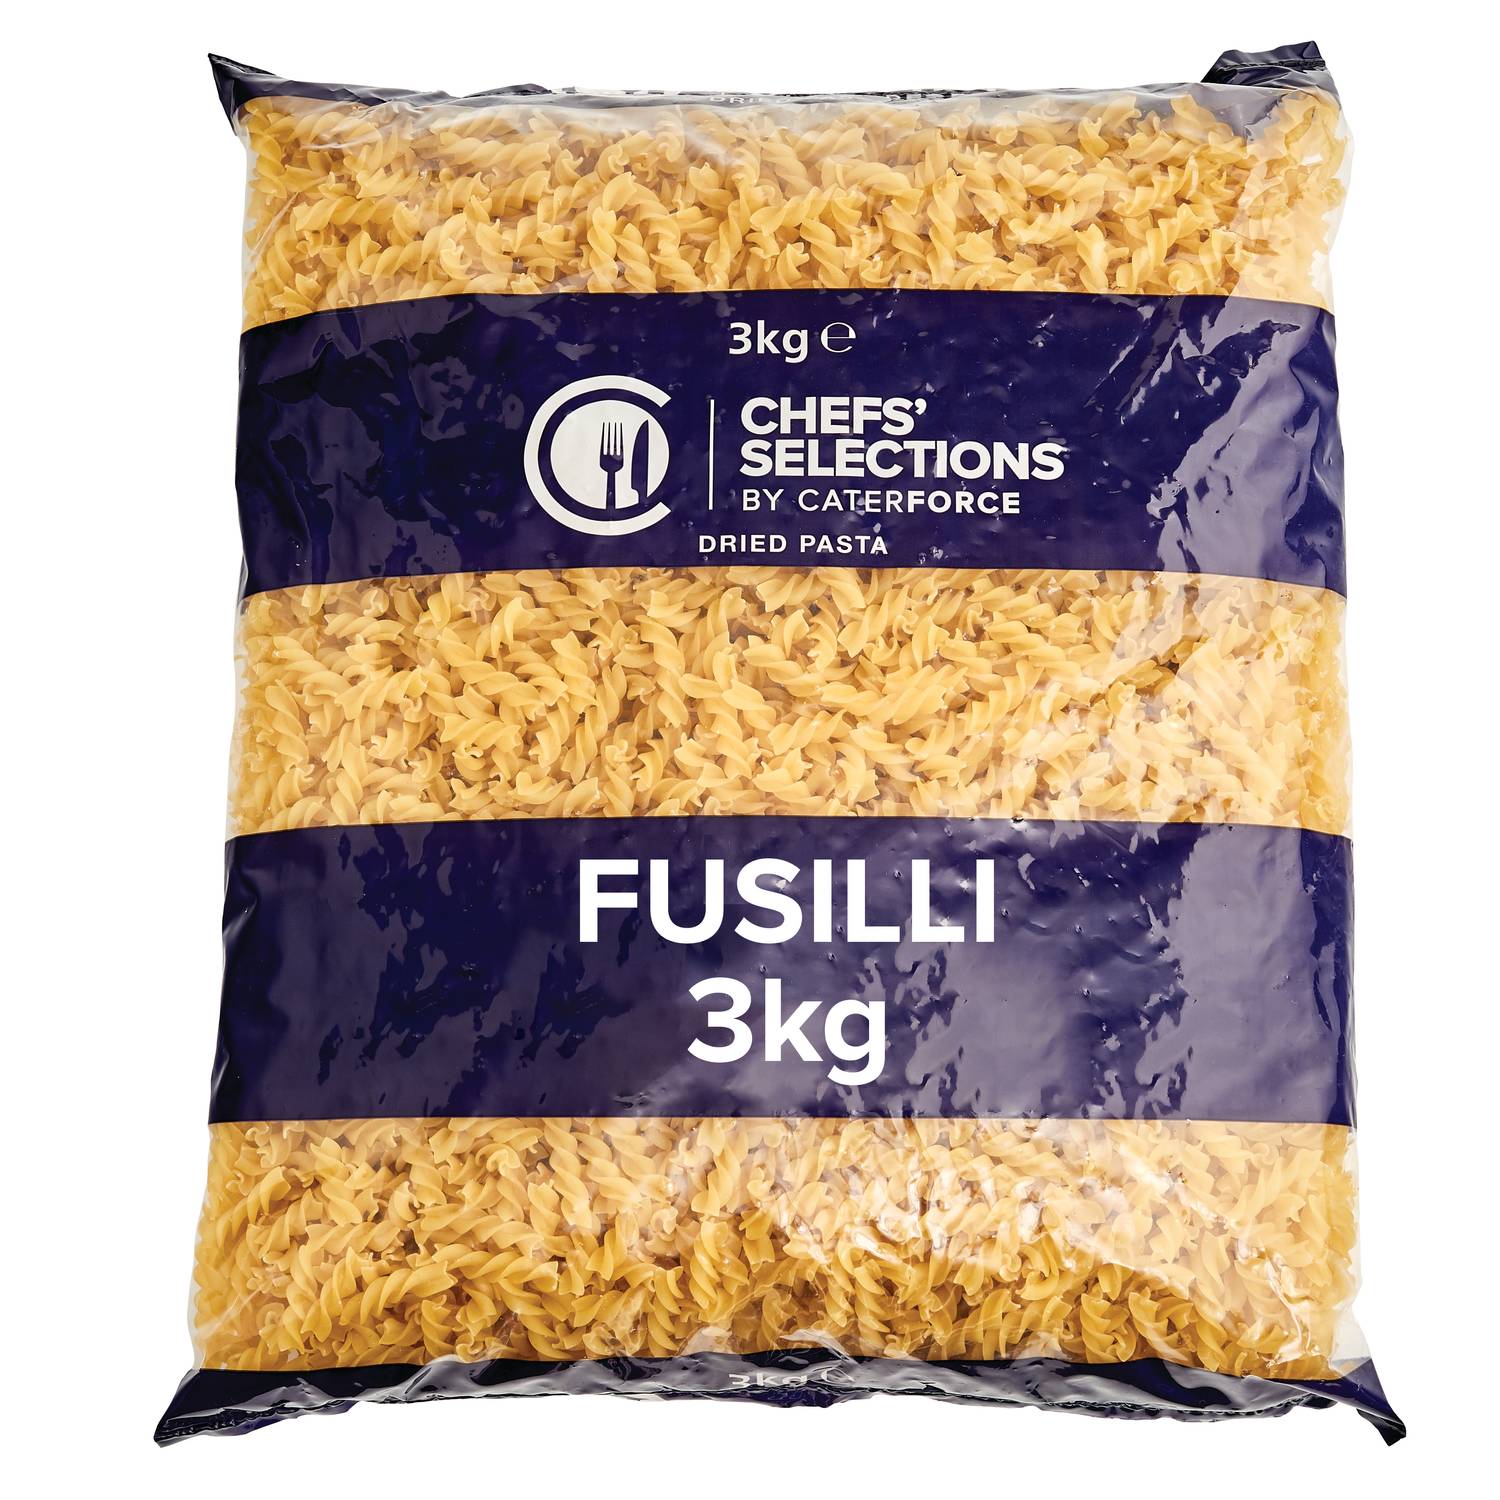 Chefs’ Selections Fusilli Pasta (4 x 3kg)